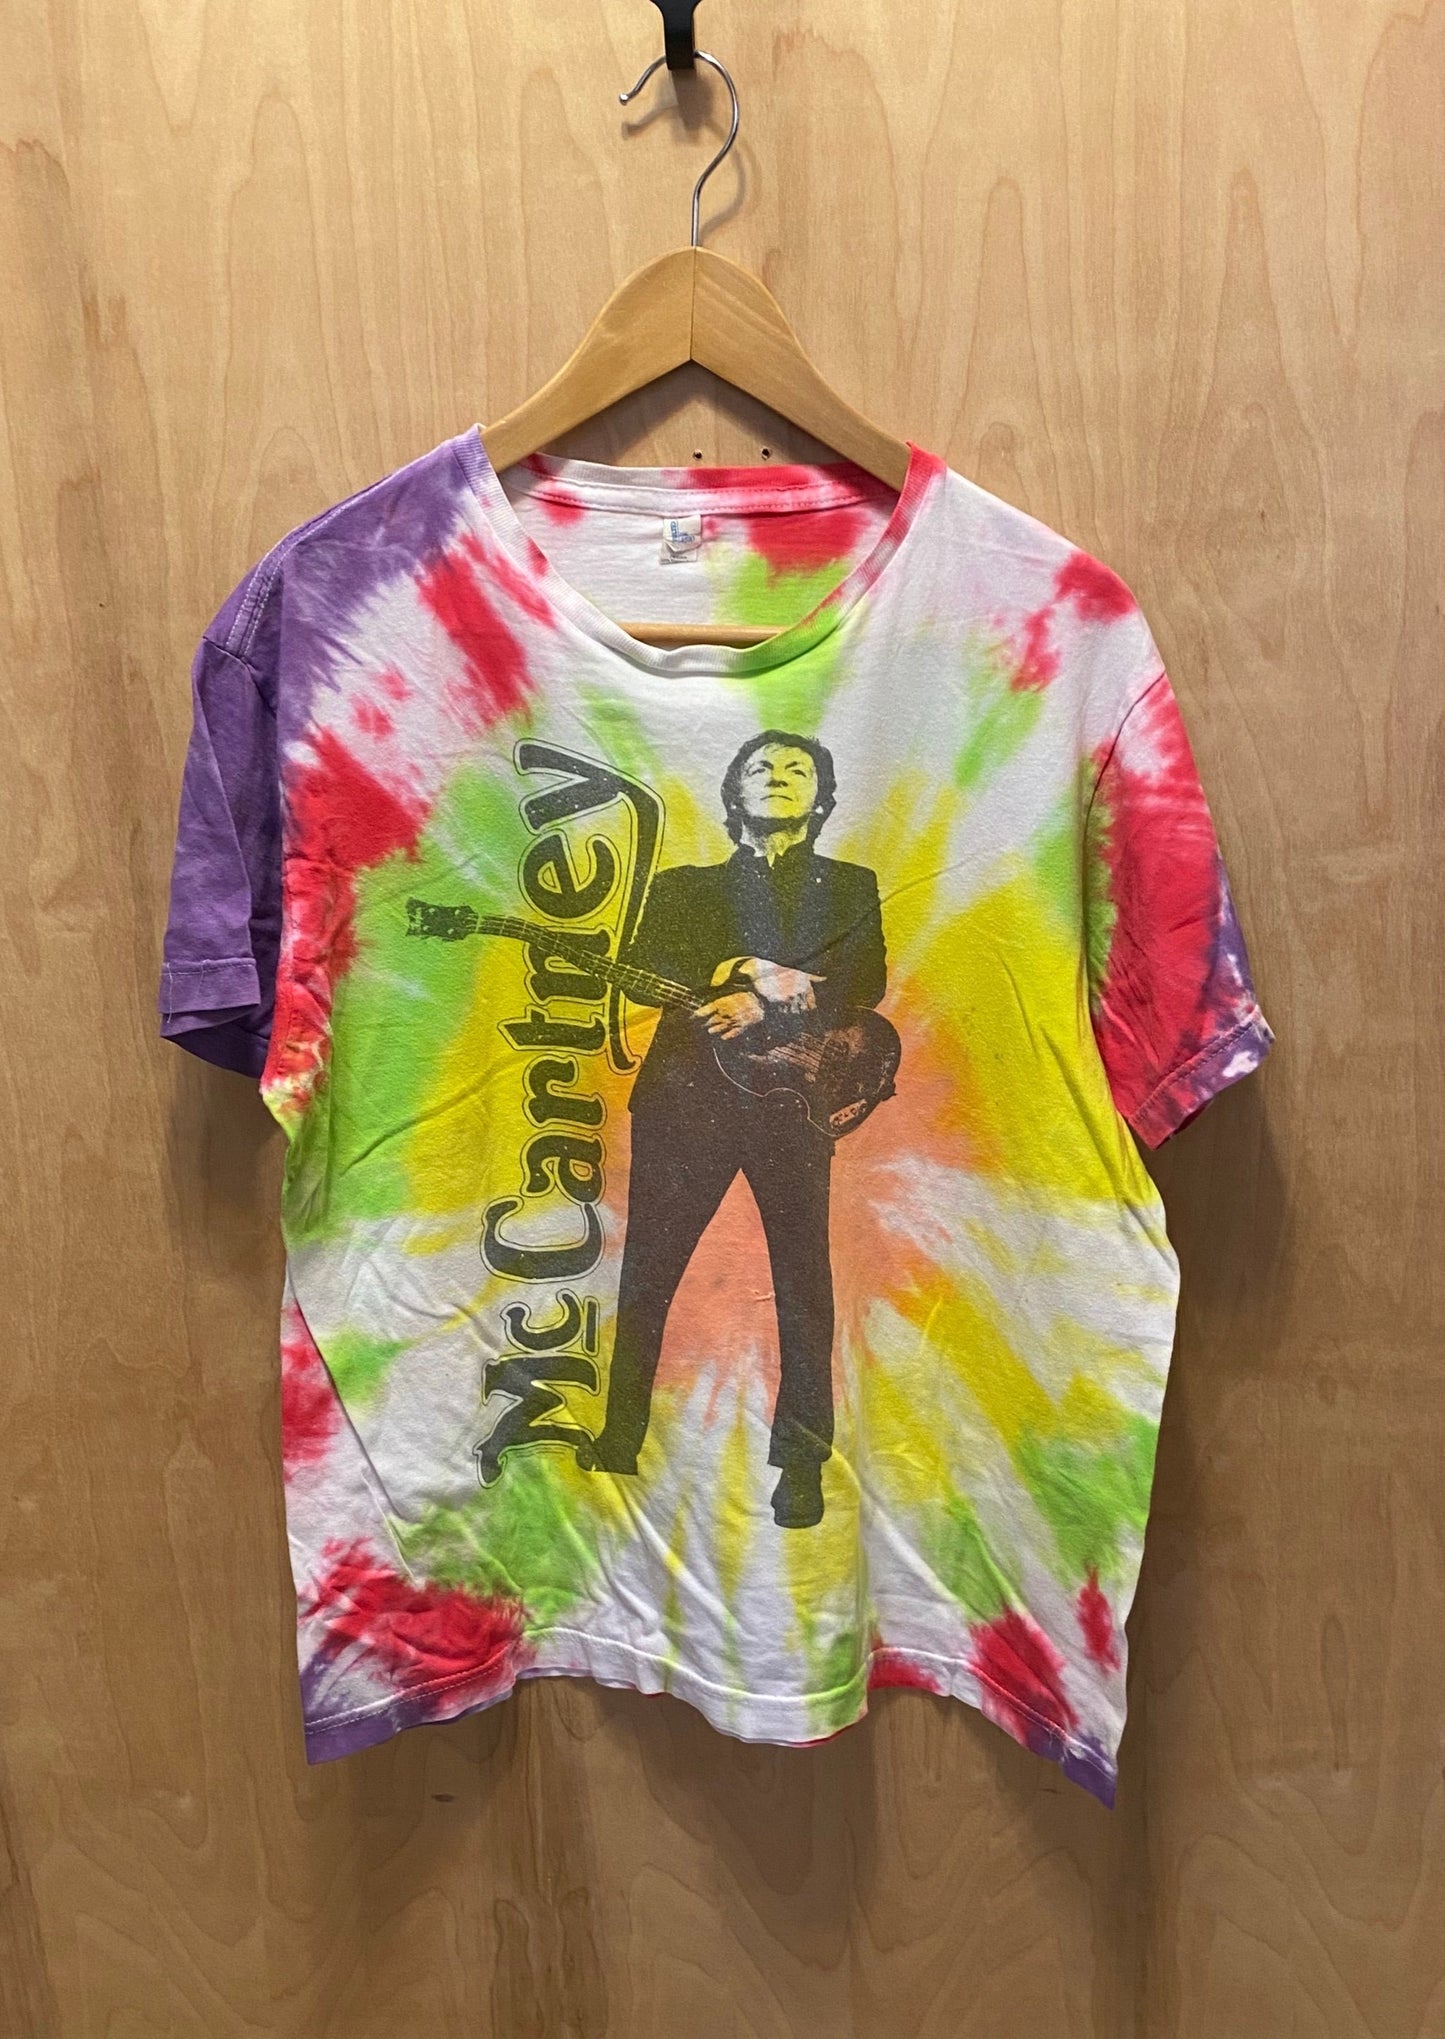 2011 Paul McCartney On the Run Tour Dyed T-Shirt (M)